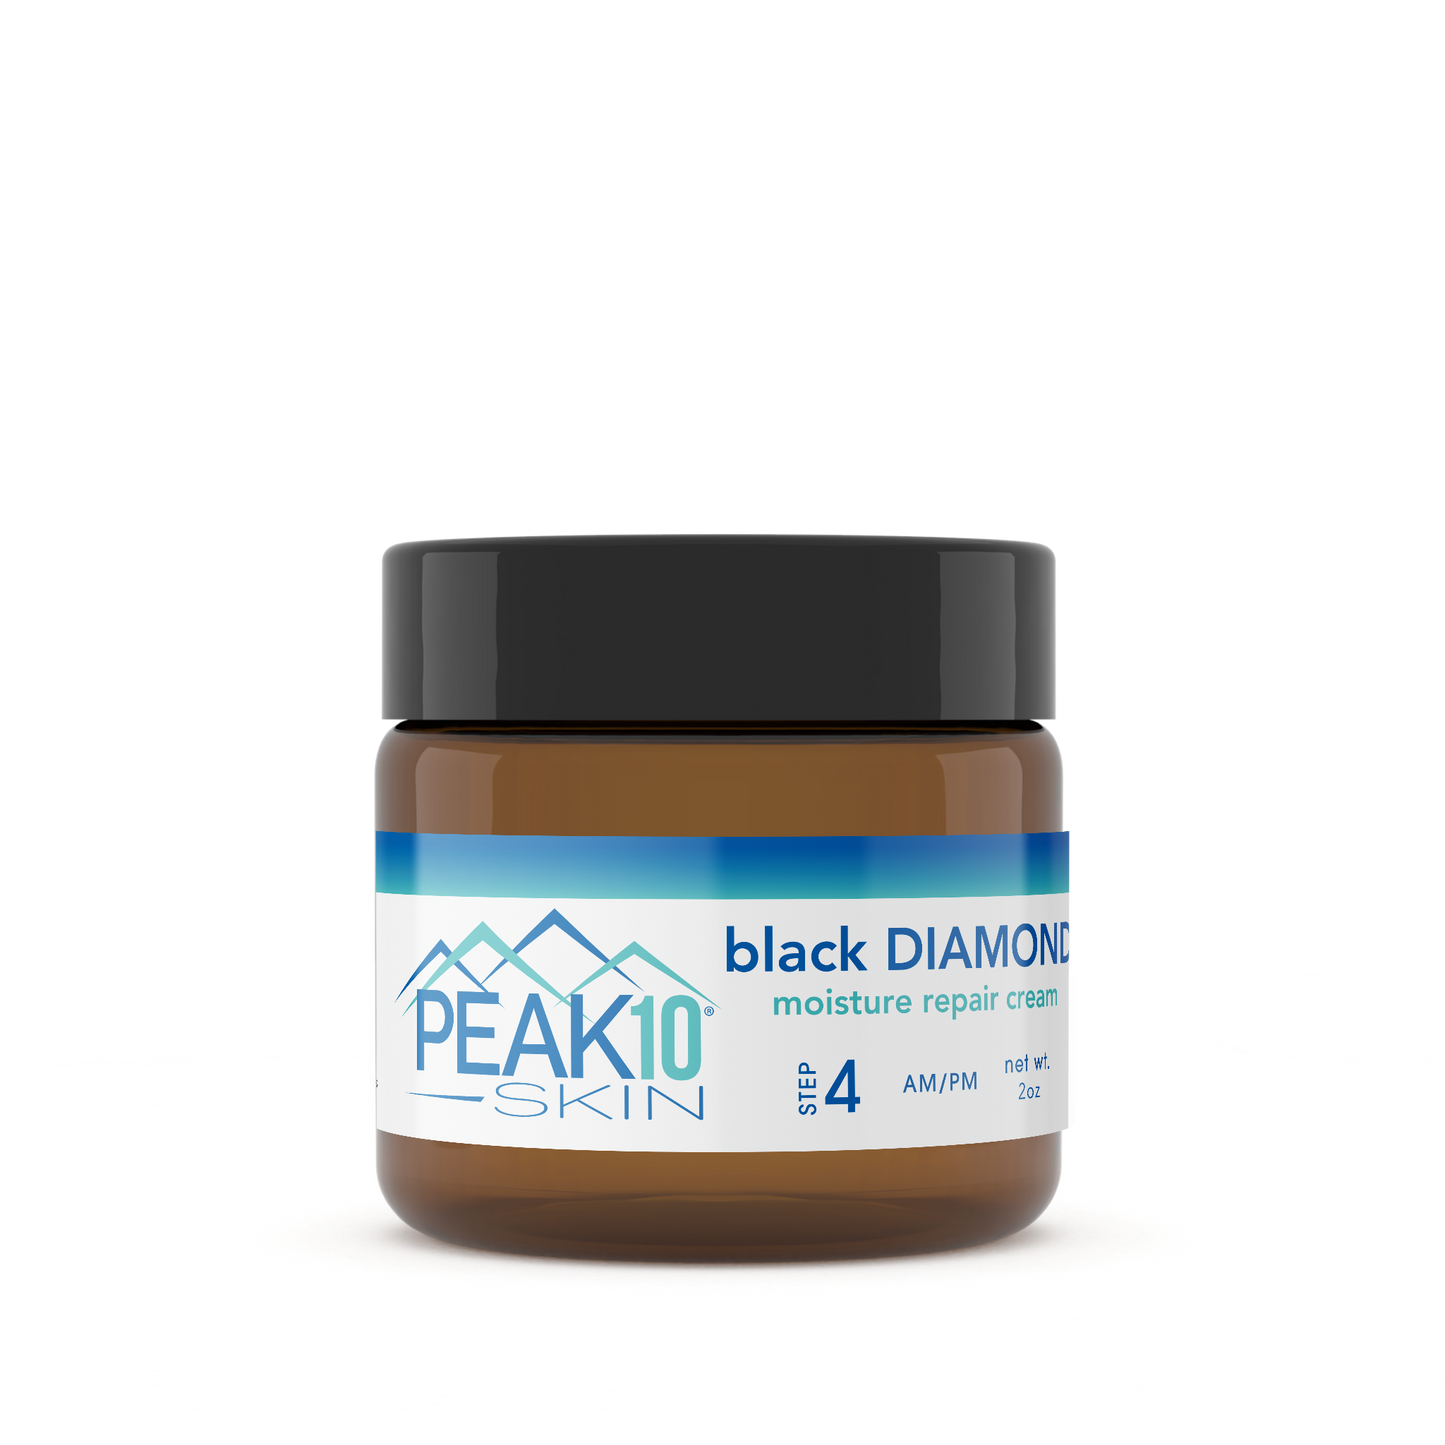 BLACK DIAMOND moisture repair cream 2.1 oz